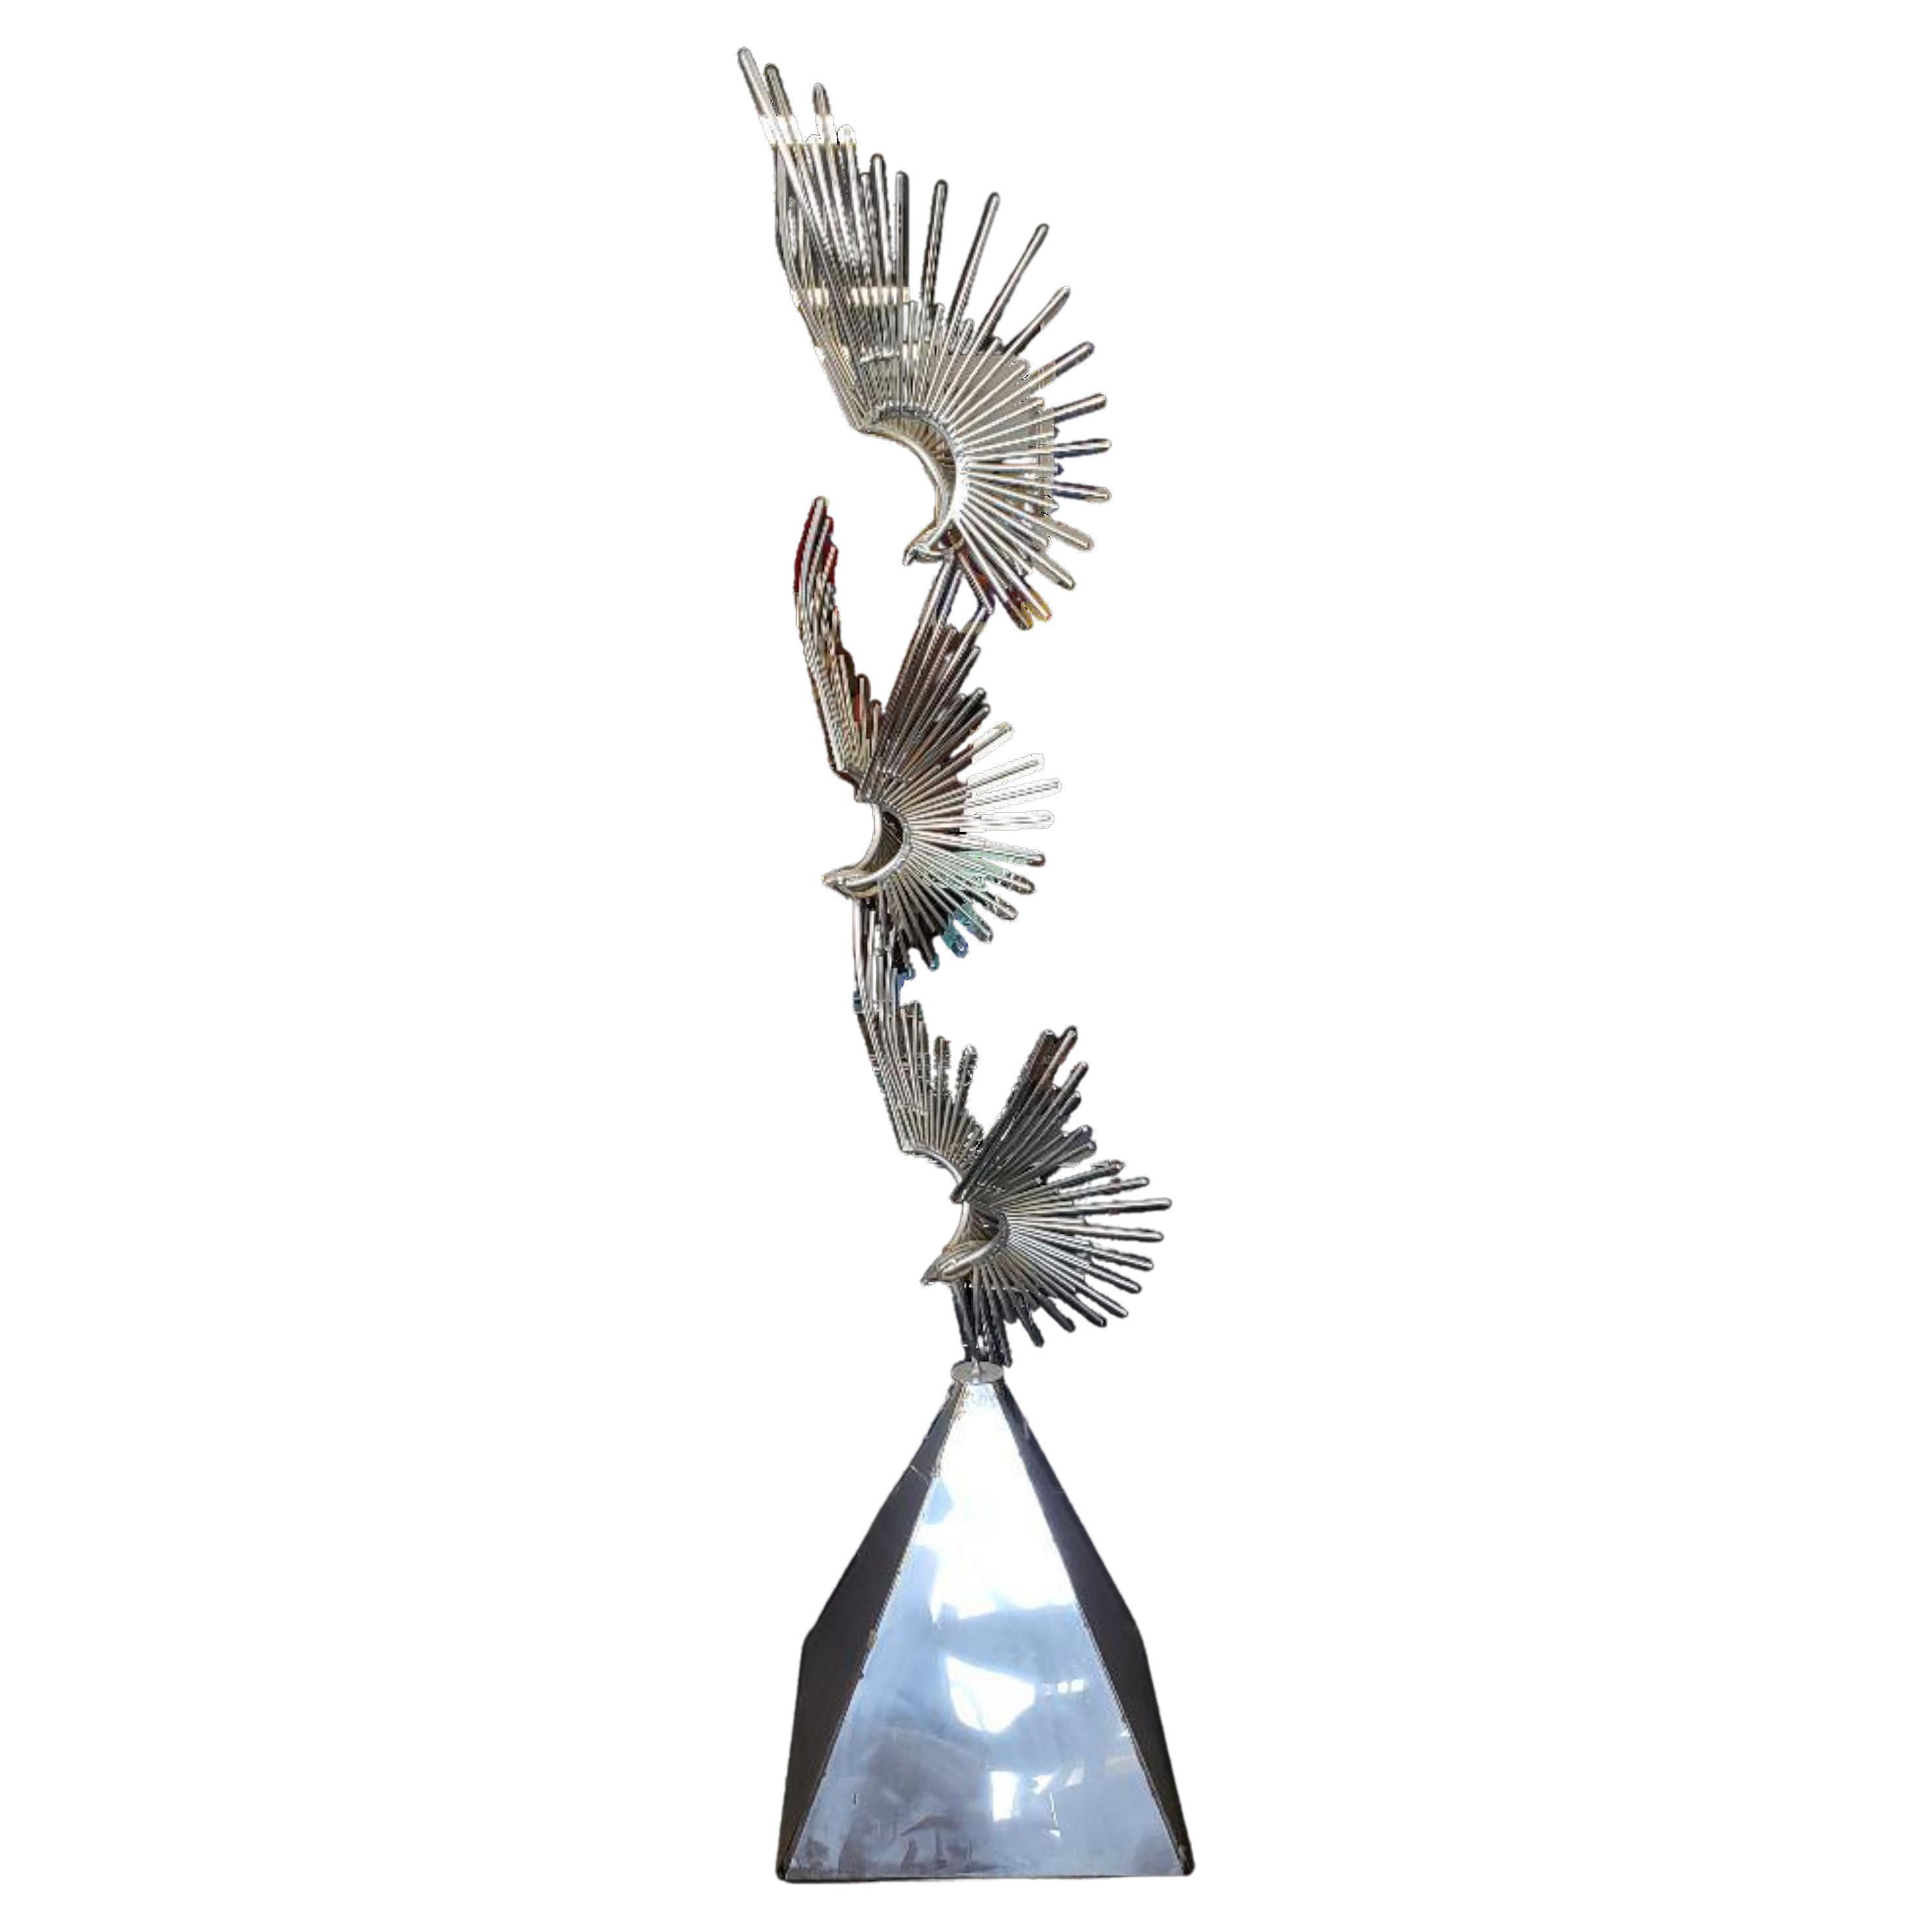 Curtis Jere: Chrom-Metall-Skulptur „Vogel im Flug“ mit Trapezsockel